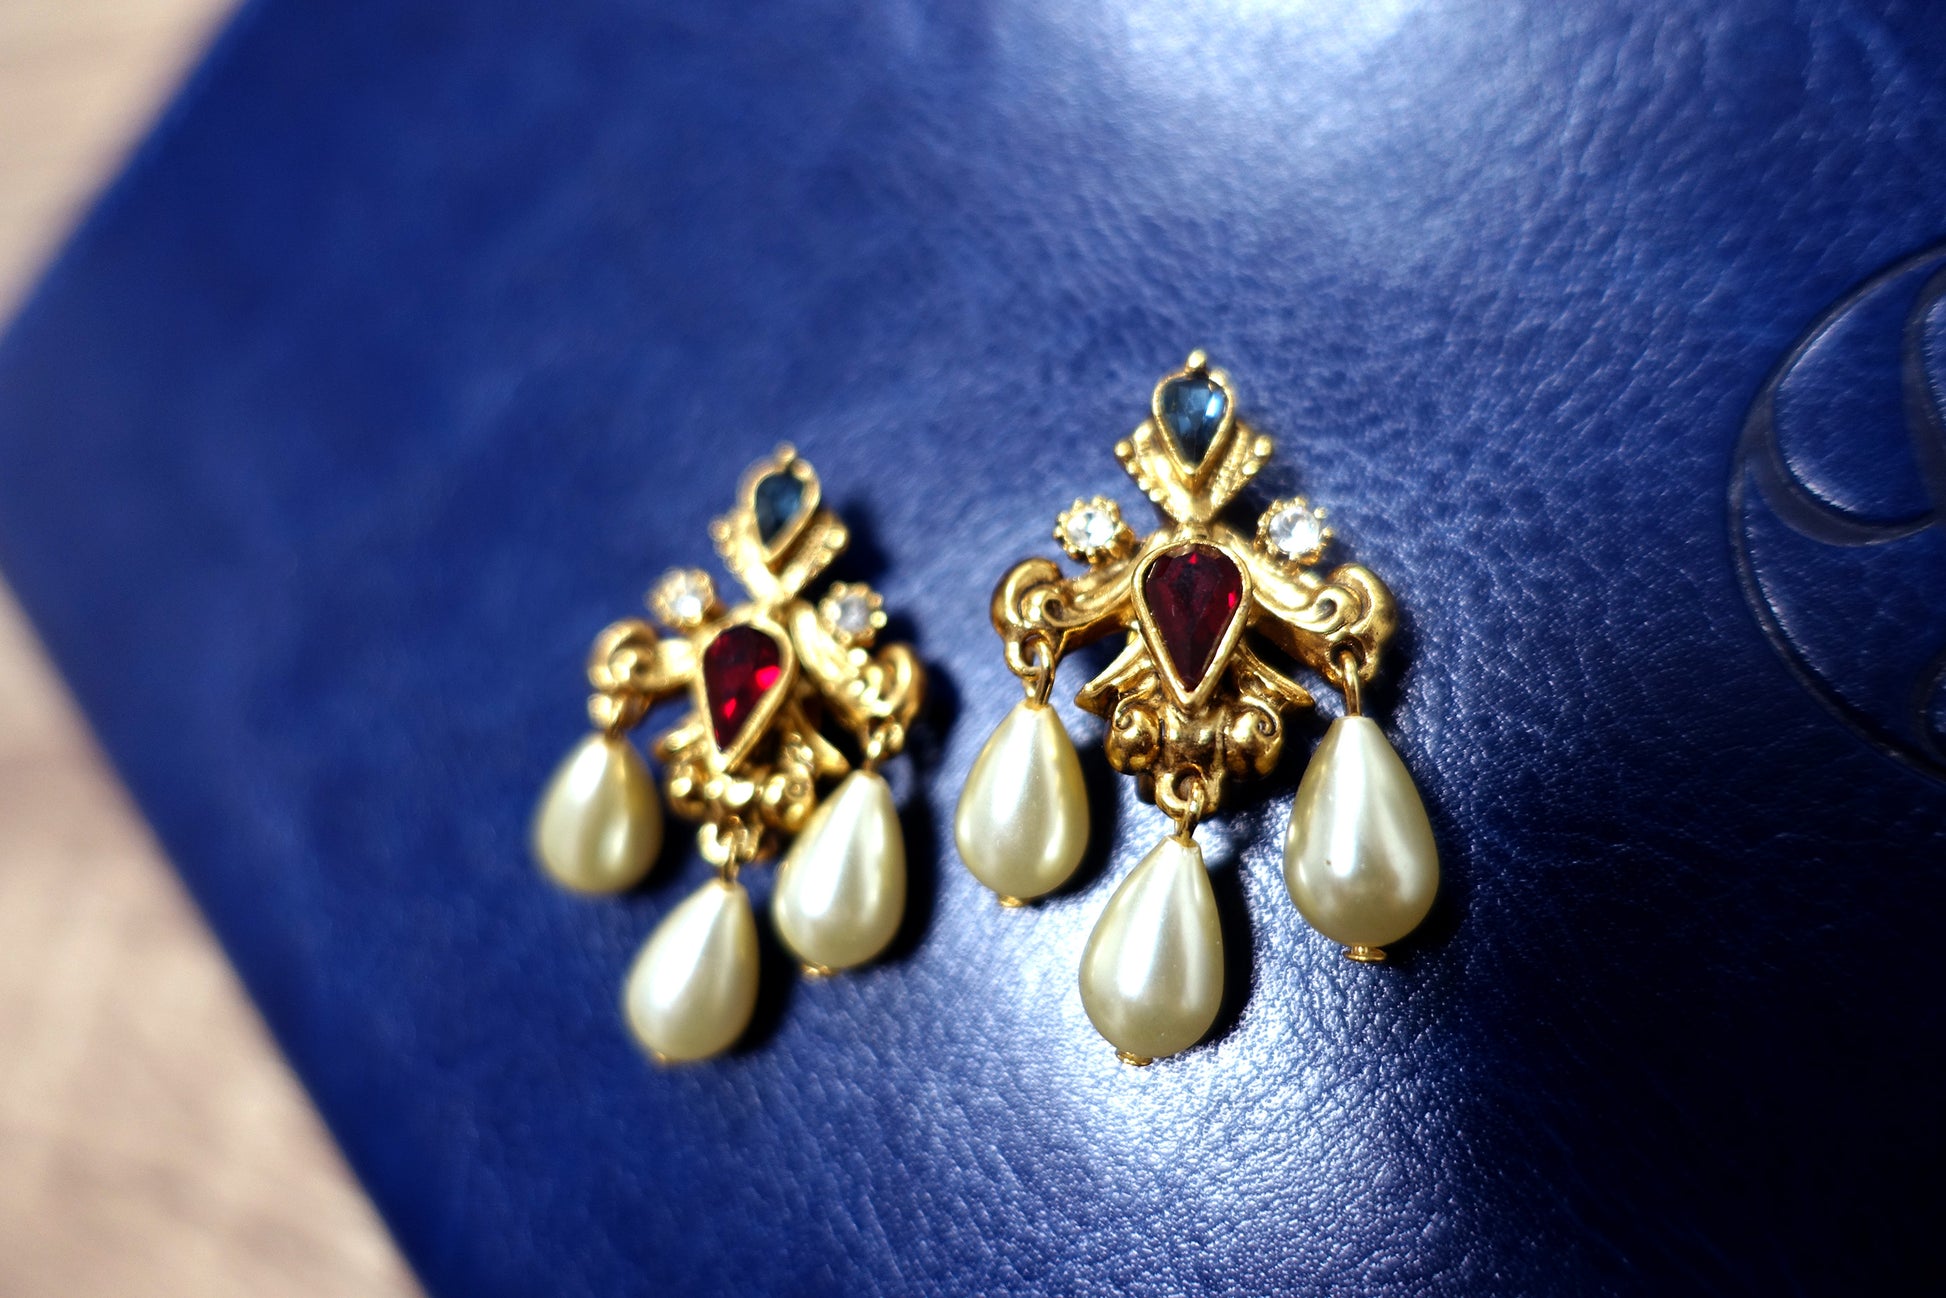 Vintage Swarovski Component Crystal Faux Pearl Chandelier Dangling Clip Earrings 施華洛世奇元素水滴型水晶仿珍珠吊燈耳夾耳環